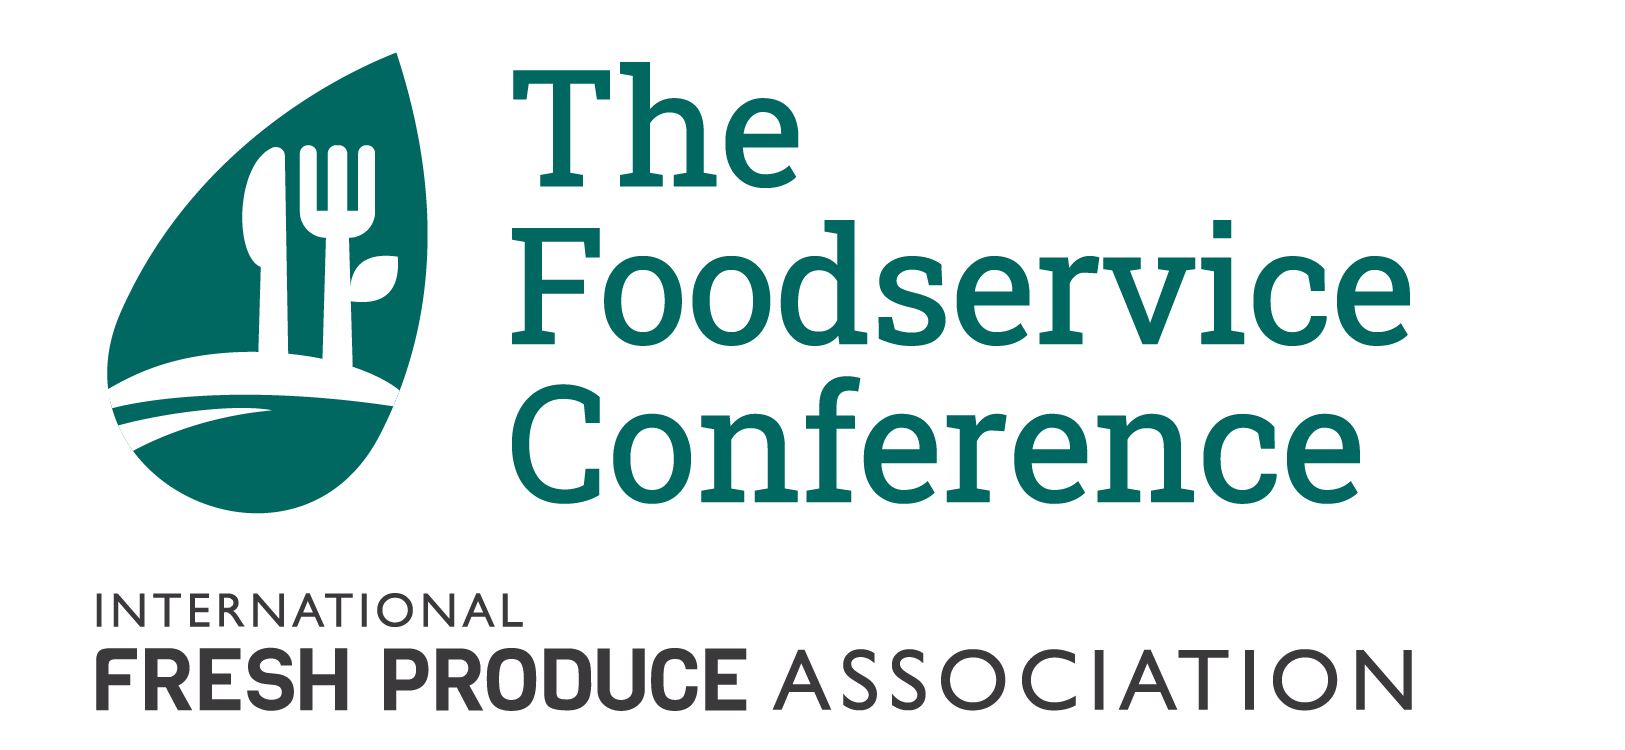 International Fresh Produce Association The Foodservice Conference Logo